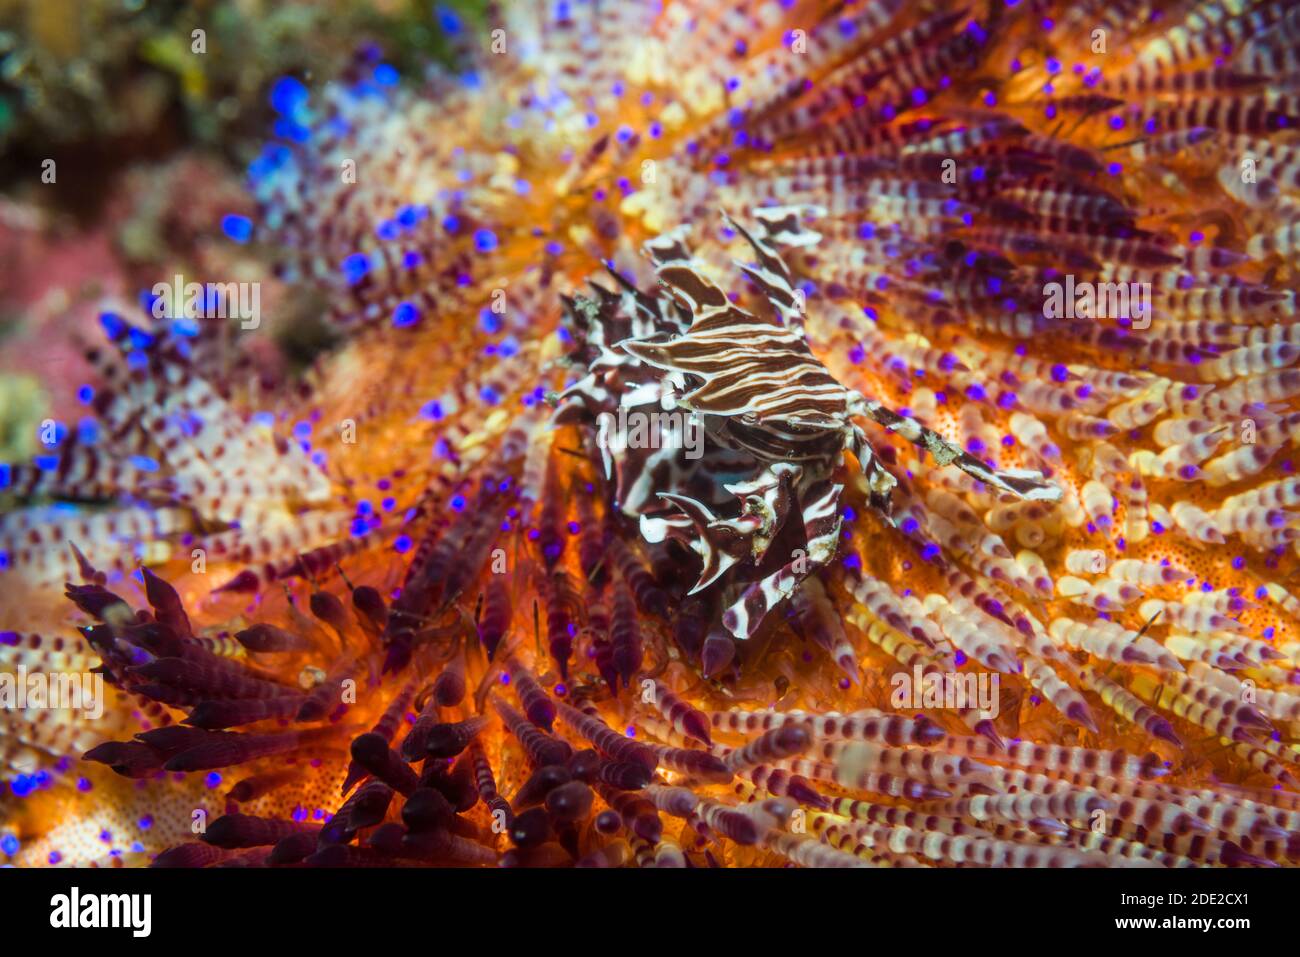 Zebra Crab or Urchin Crab [Zebrida adamsii] on Fire Urchin [Asthenosoma ijimai].  Lembeh Strait, North Sulawesi, Indonesial. Stock Photo